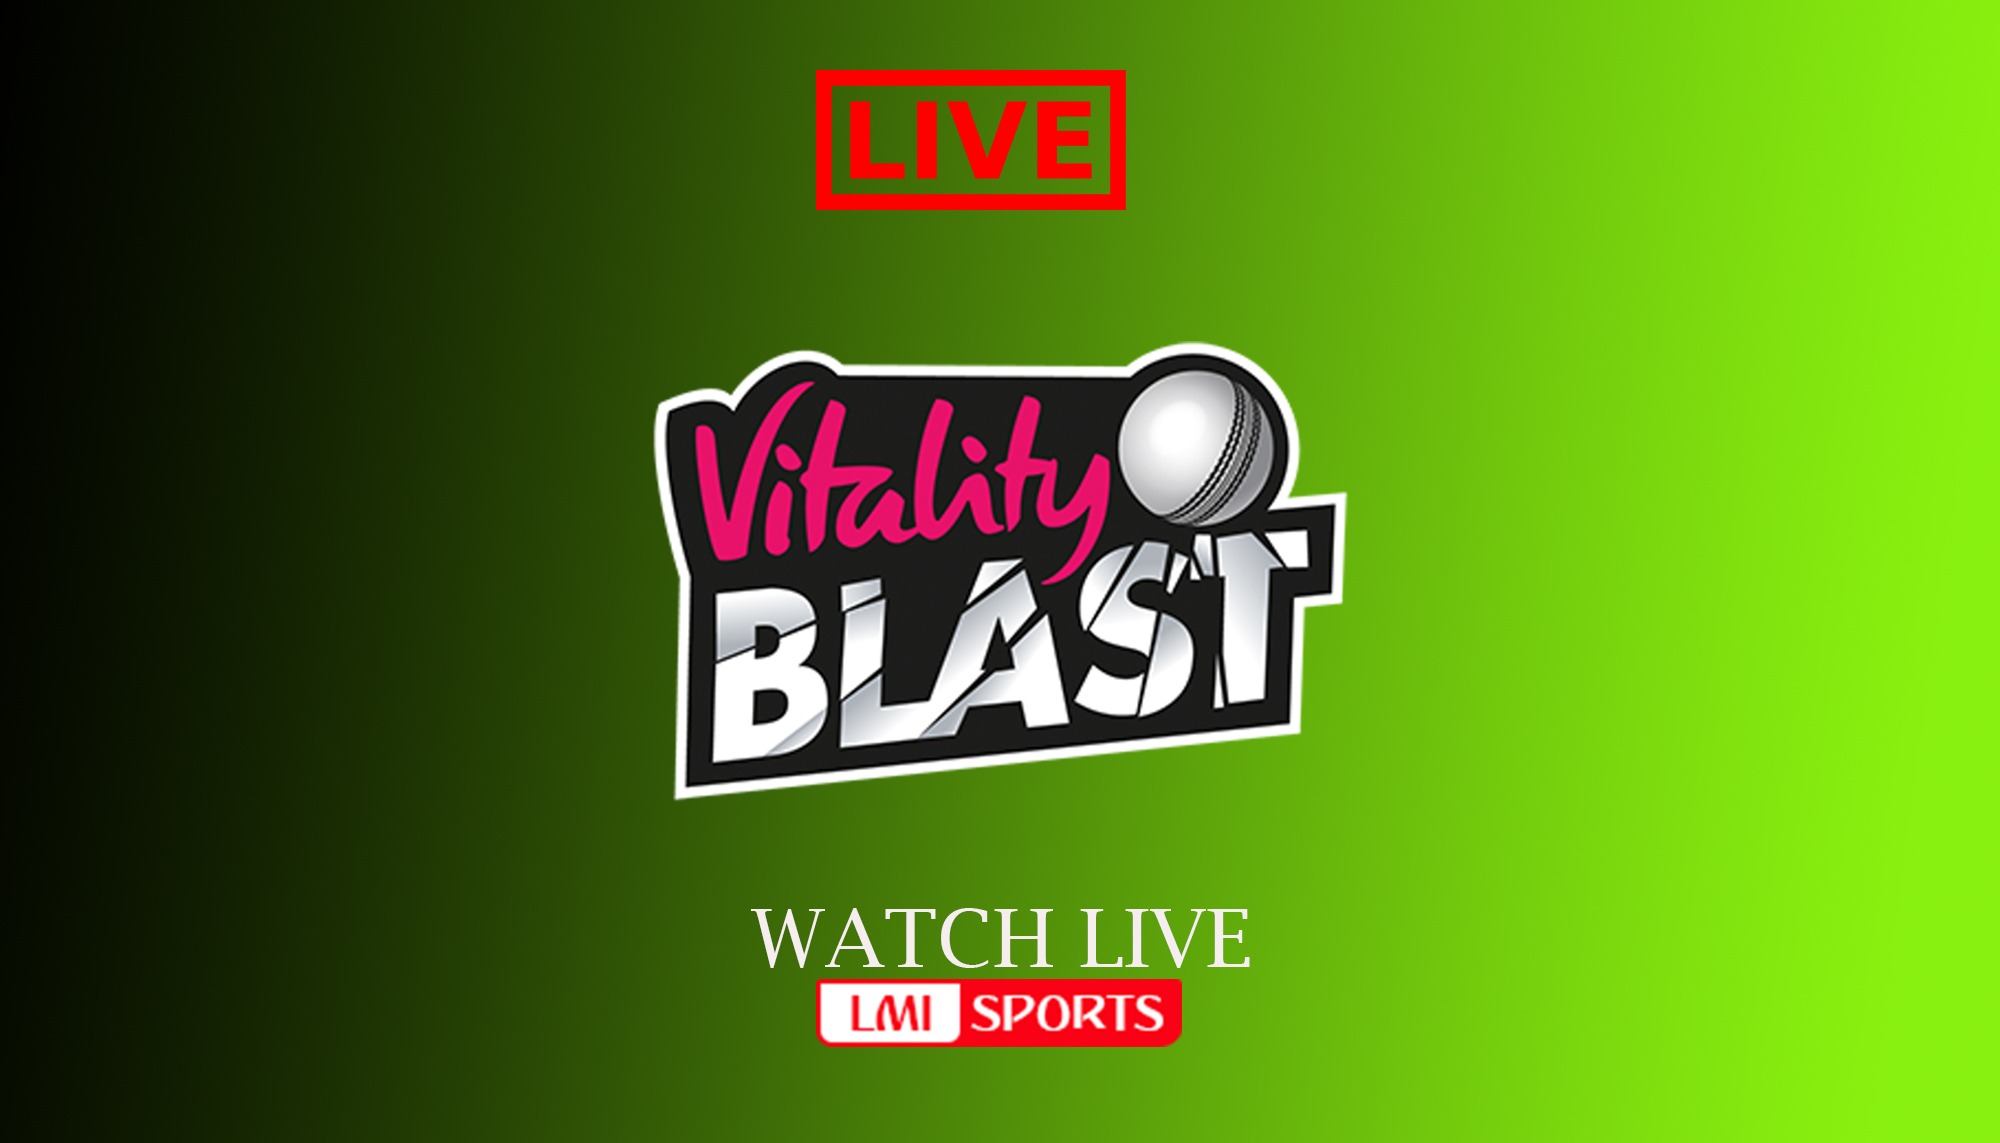 Vitality T20 Blast 2019: Full Schedule, Venues, Squad, TV & Live Streaming